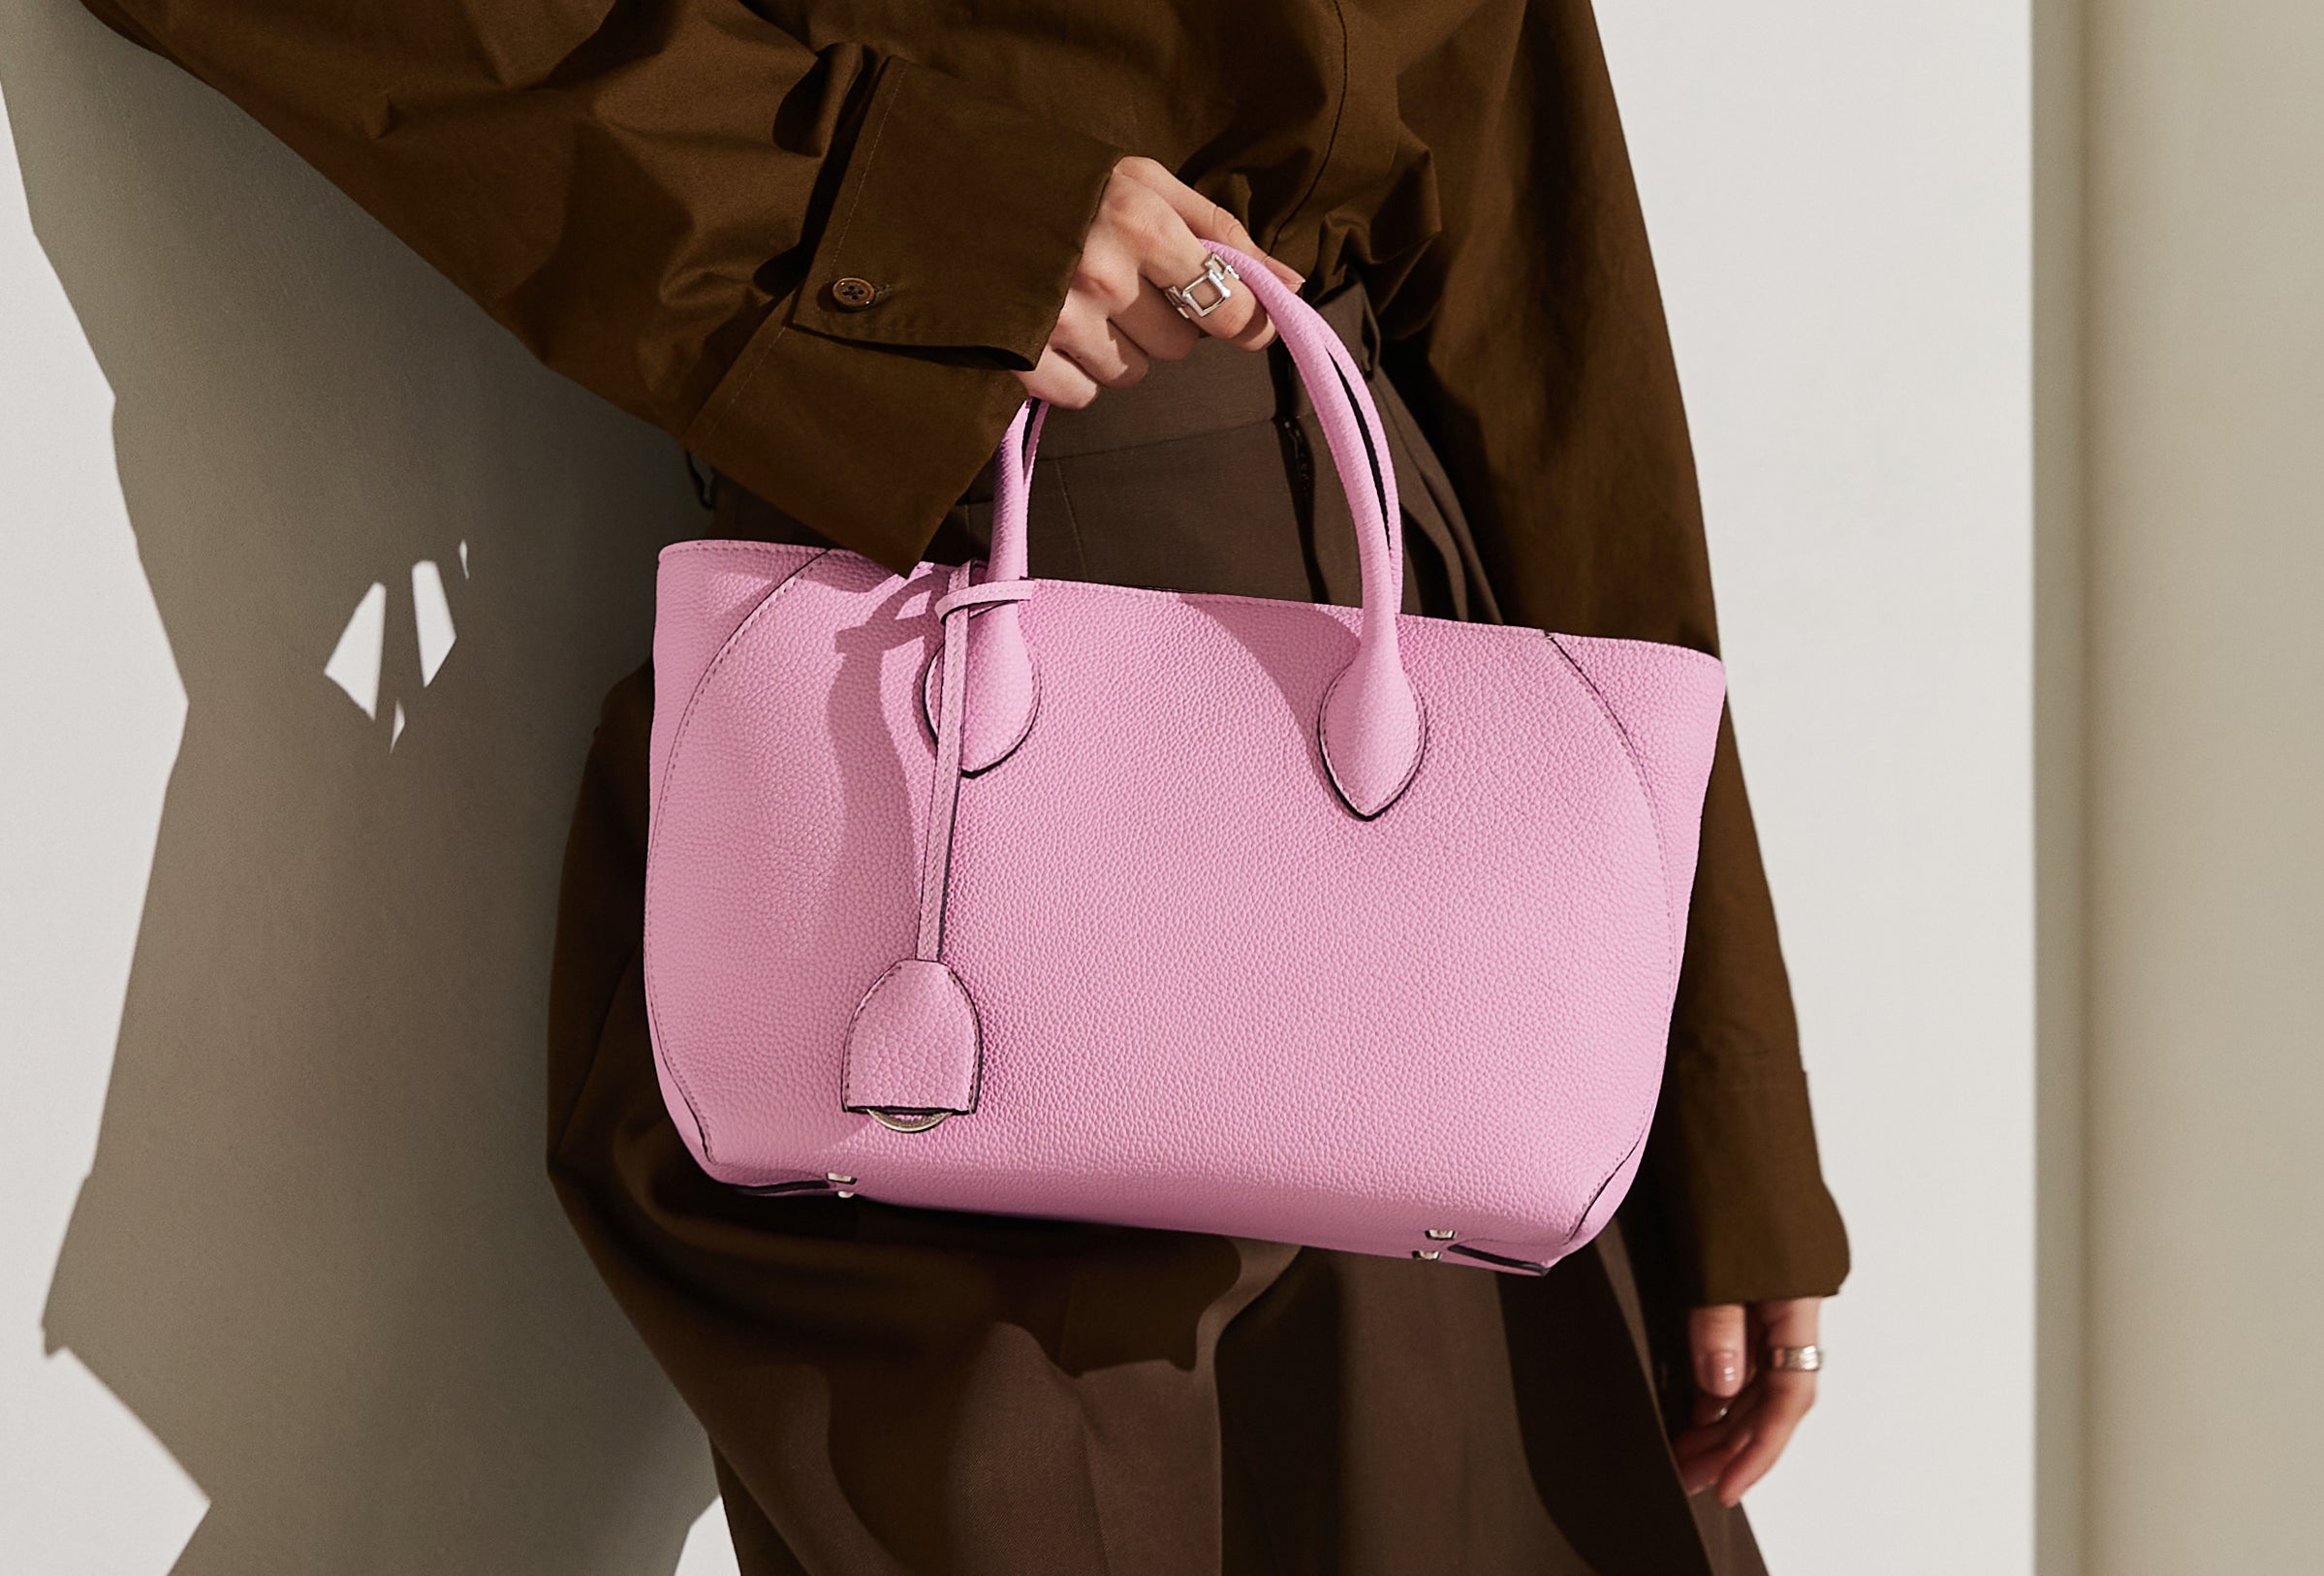 A stylish pink handbag made of genuine leather.